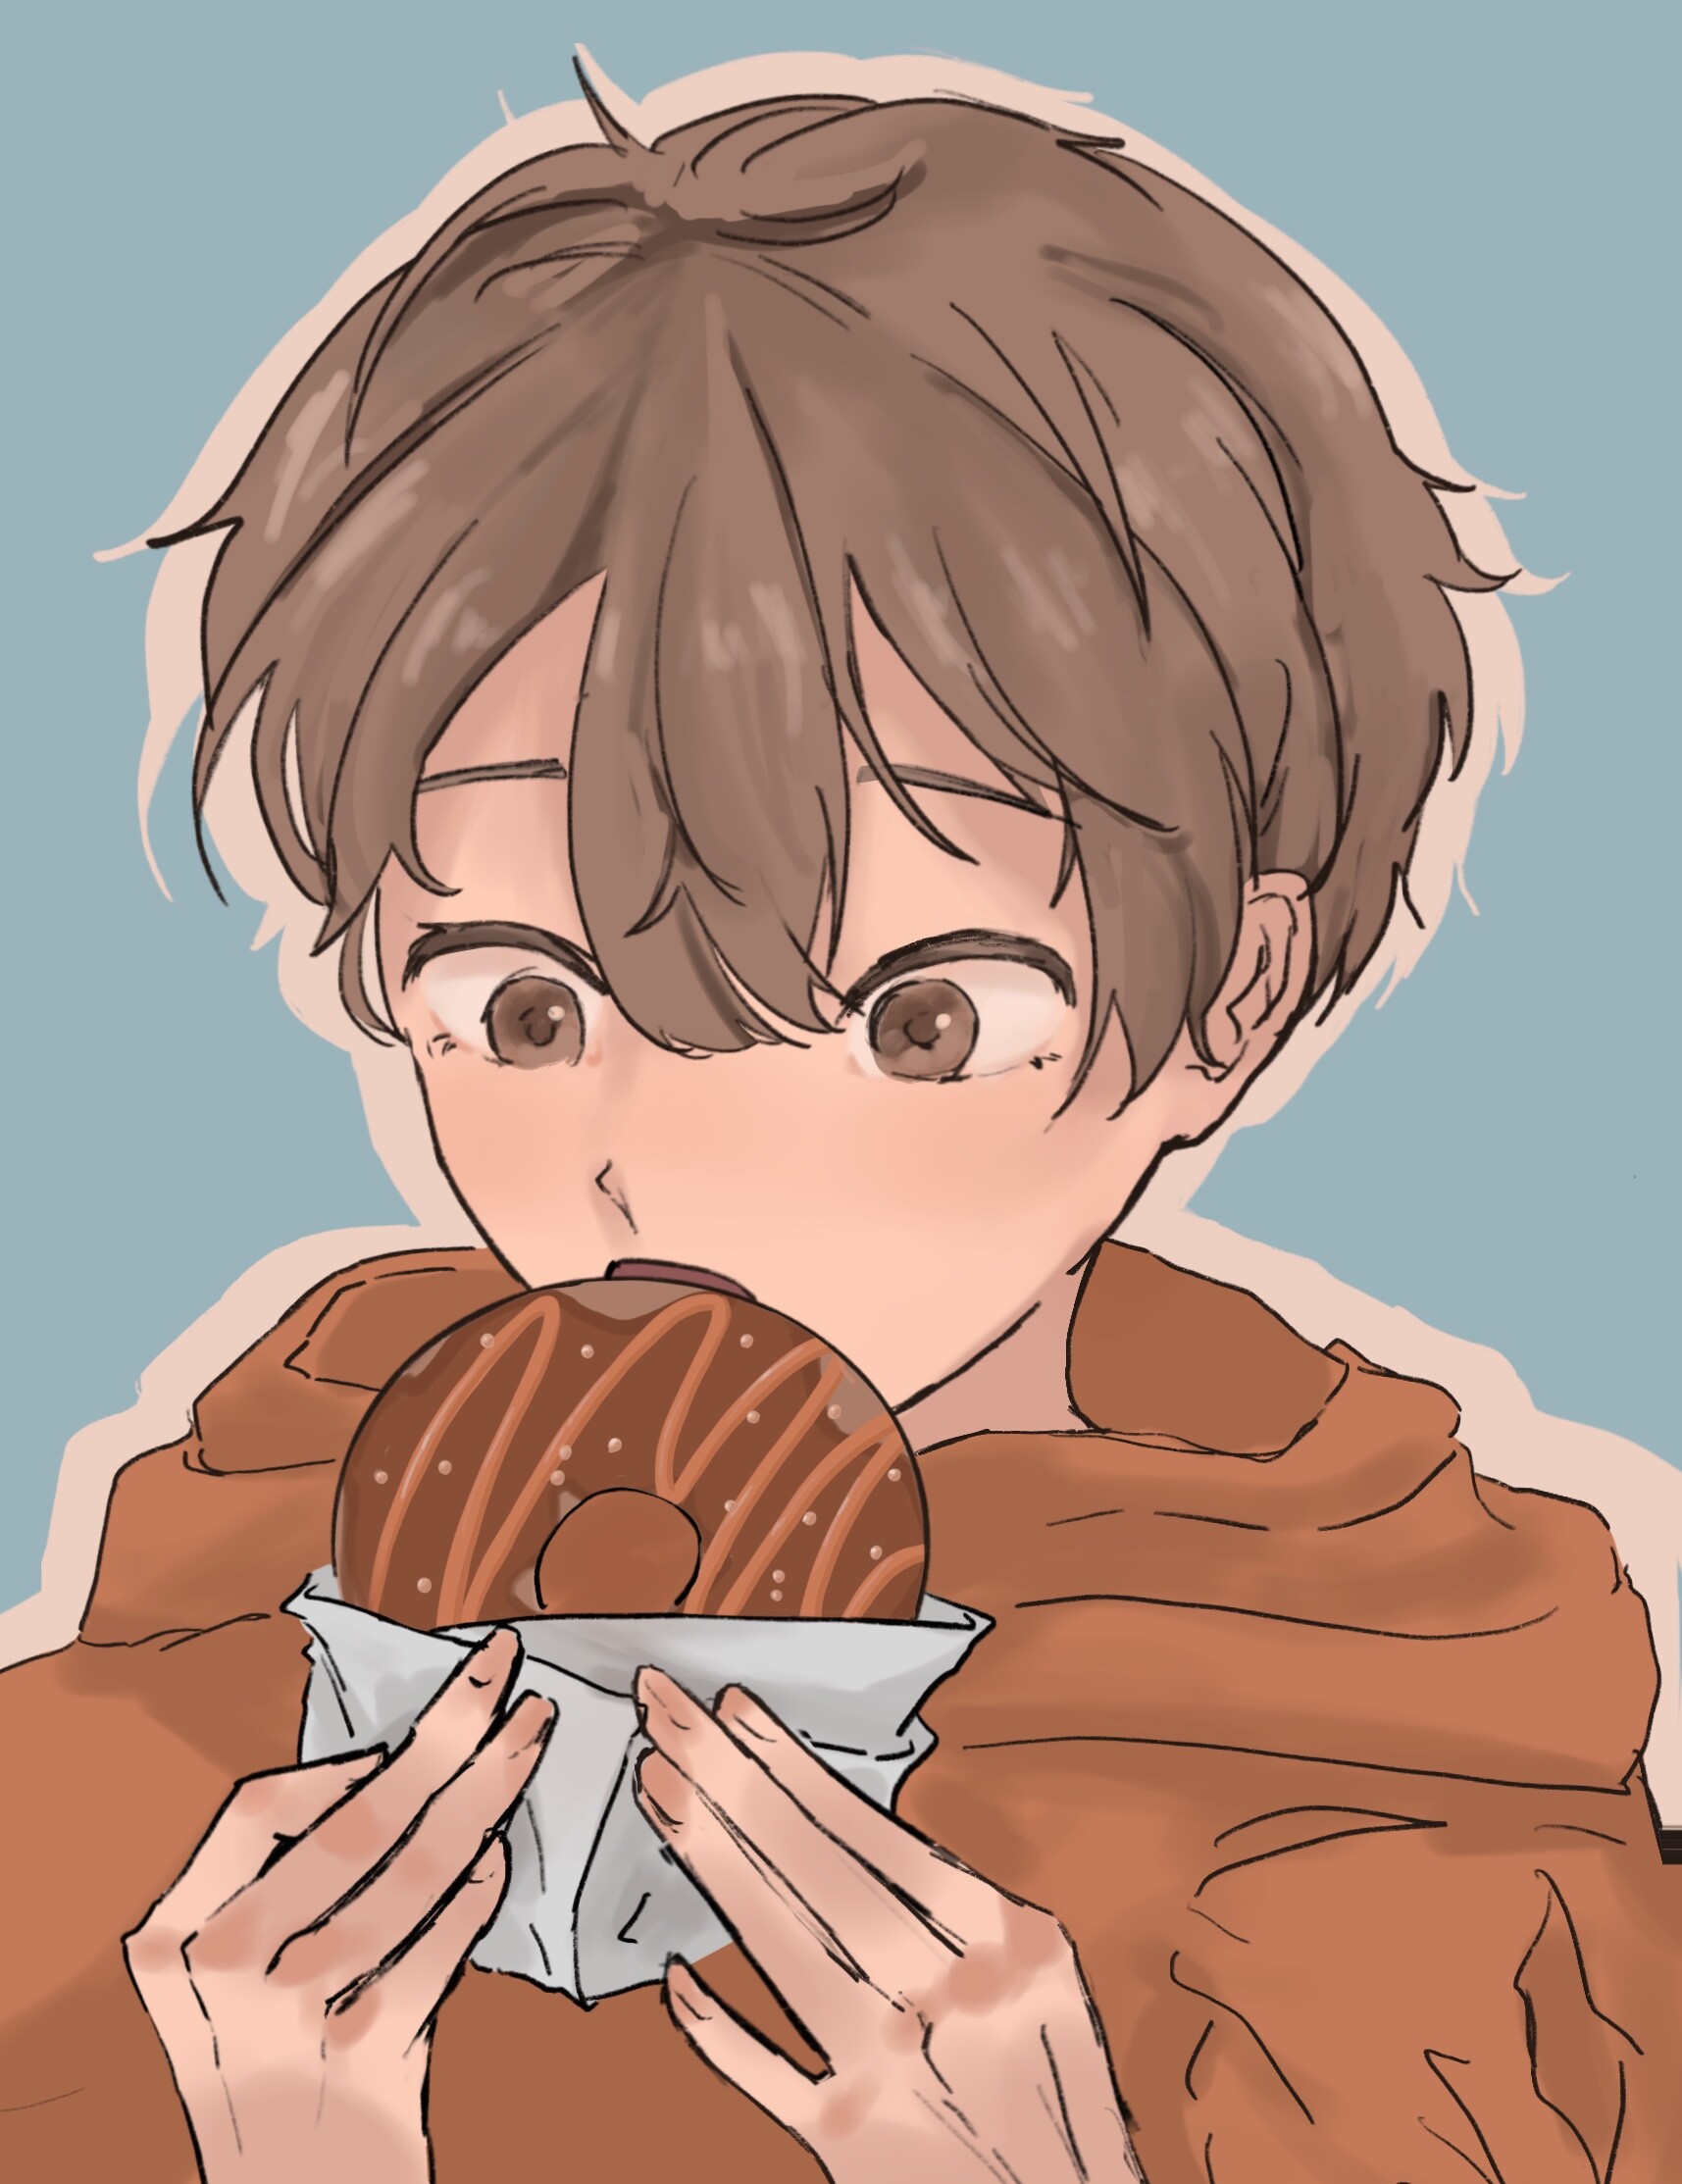 ArtStation - Boy eating donut